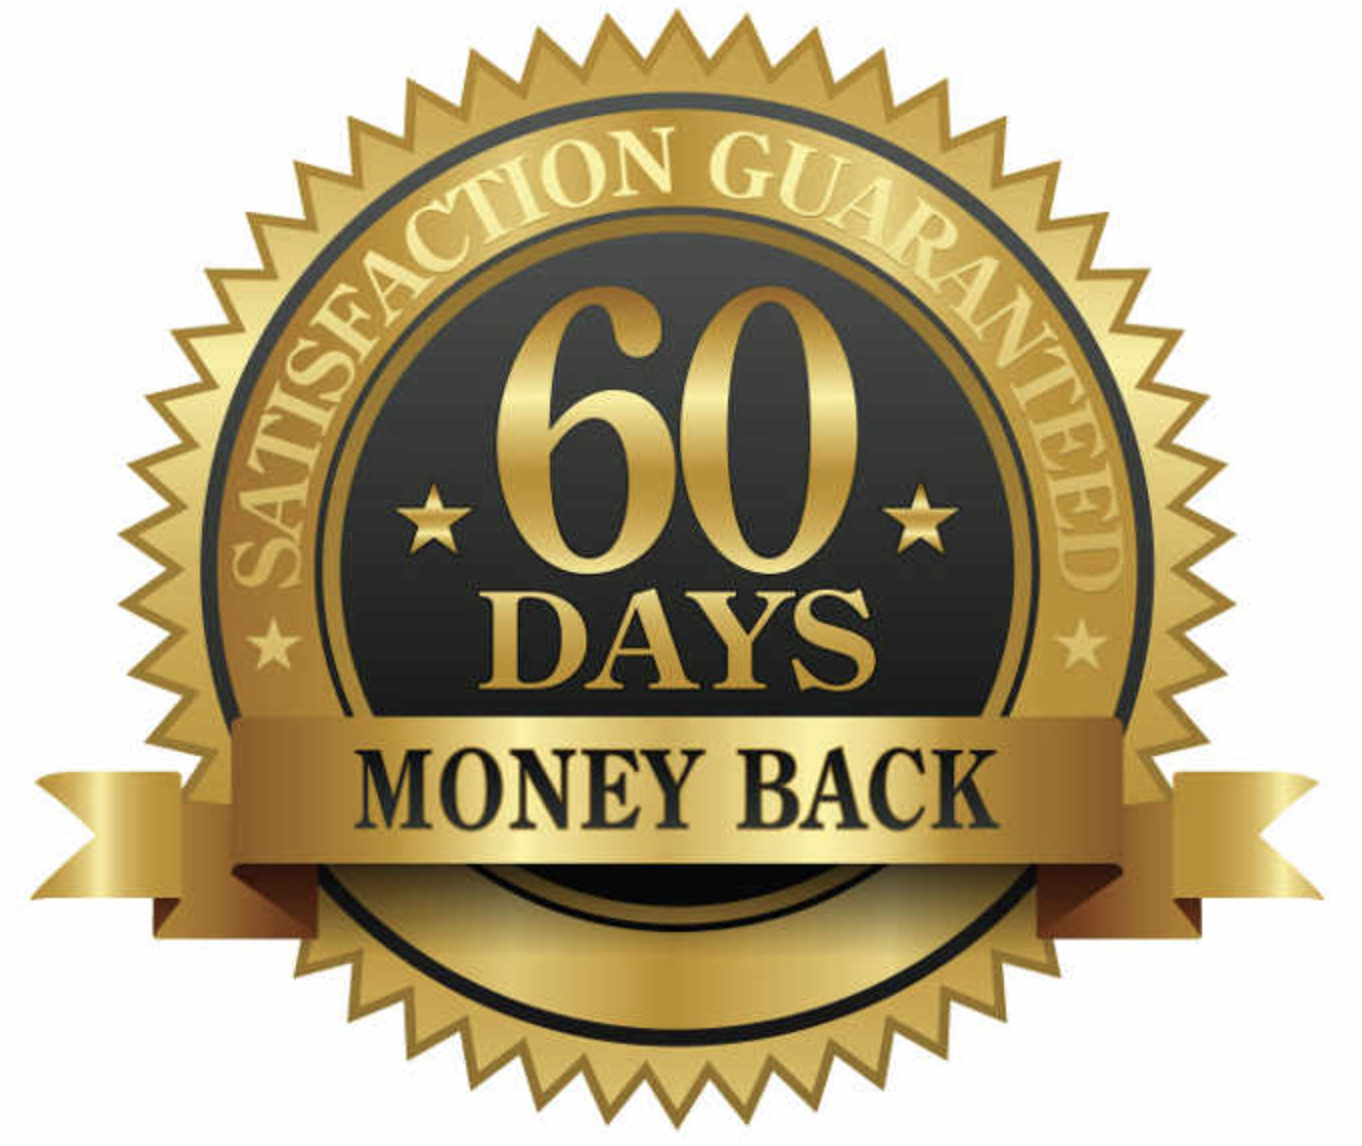  60 day Money Back